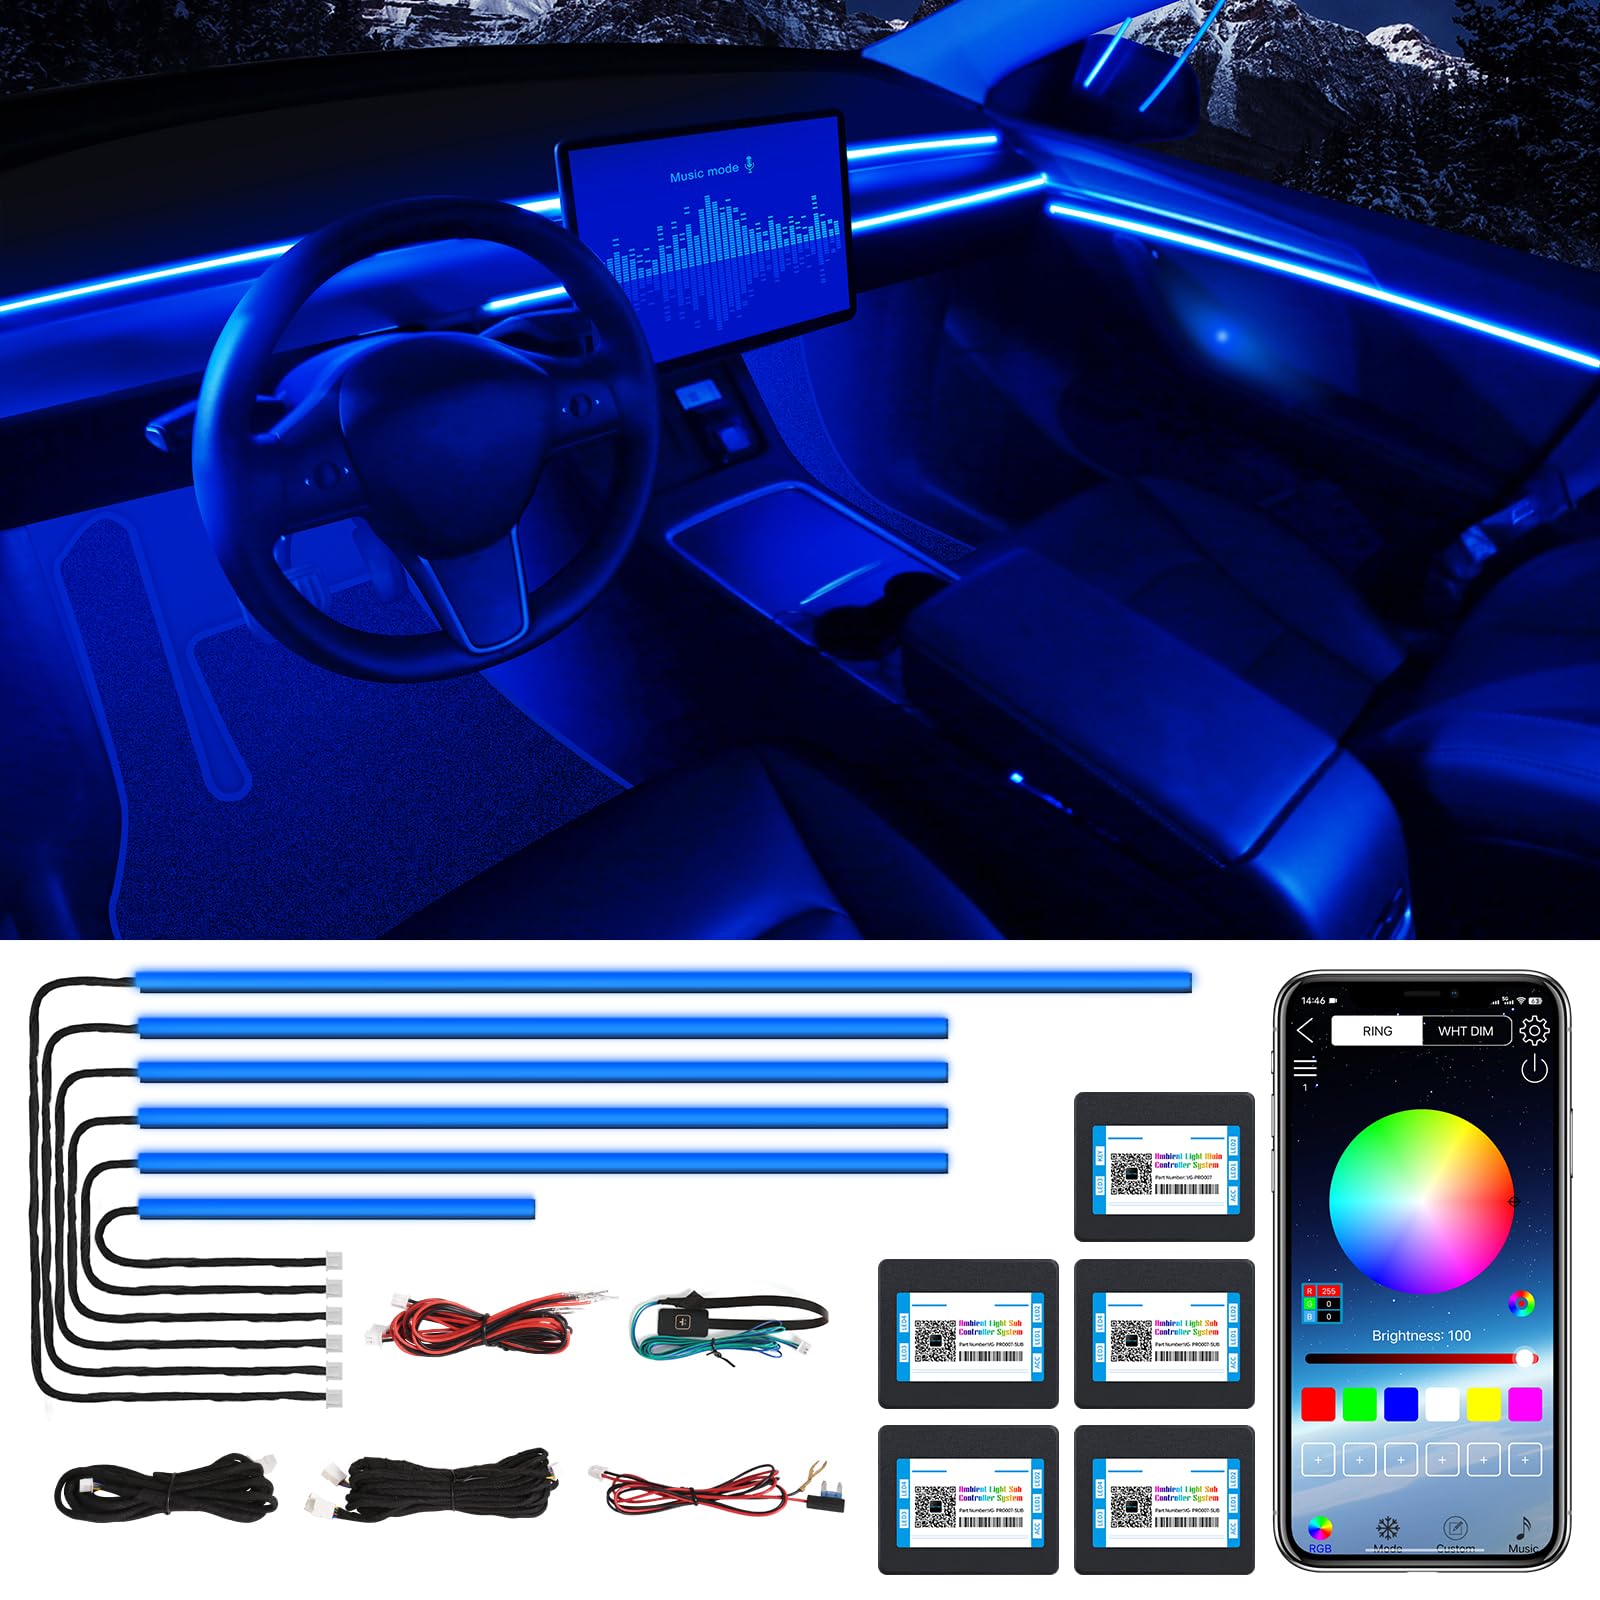 TWETIZ Acrylic Interior Car LED Strip Light, RGB 6 in 1 with 175 inches 600 LEDs Car Ambient Lighting Kits, 16 Million Colors Sound Active LED Strip for Car von TWETIZ